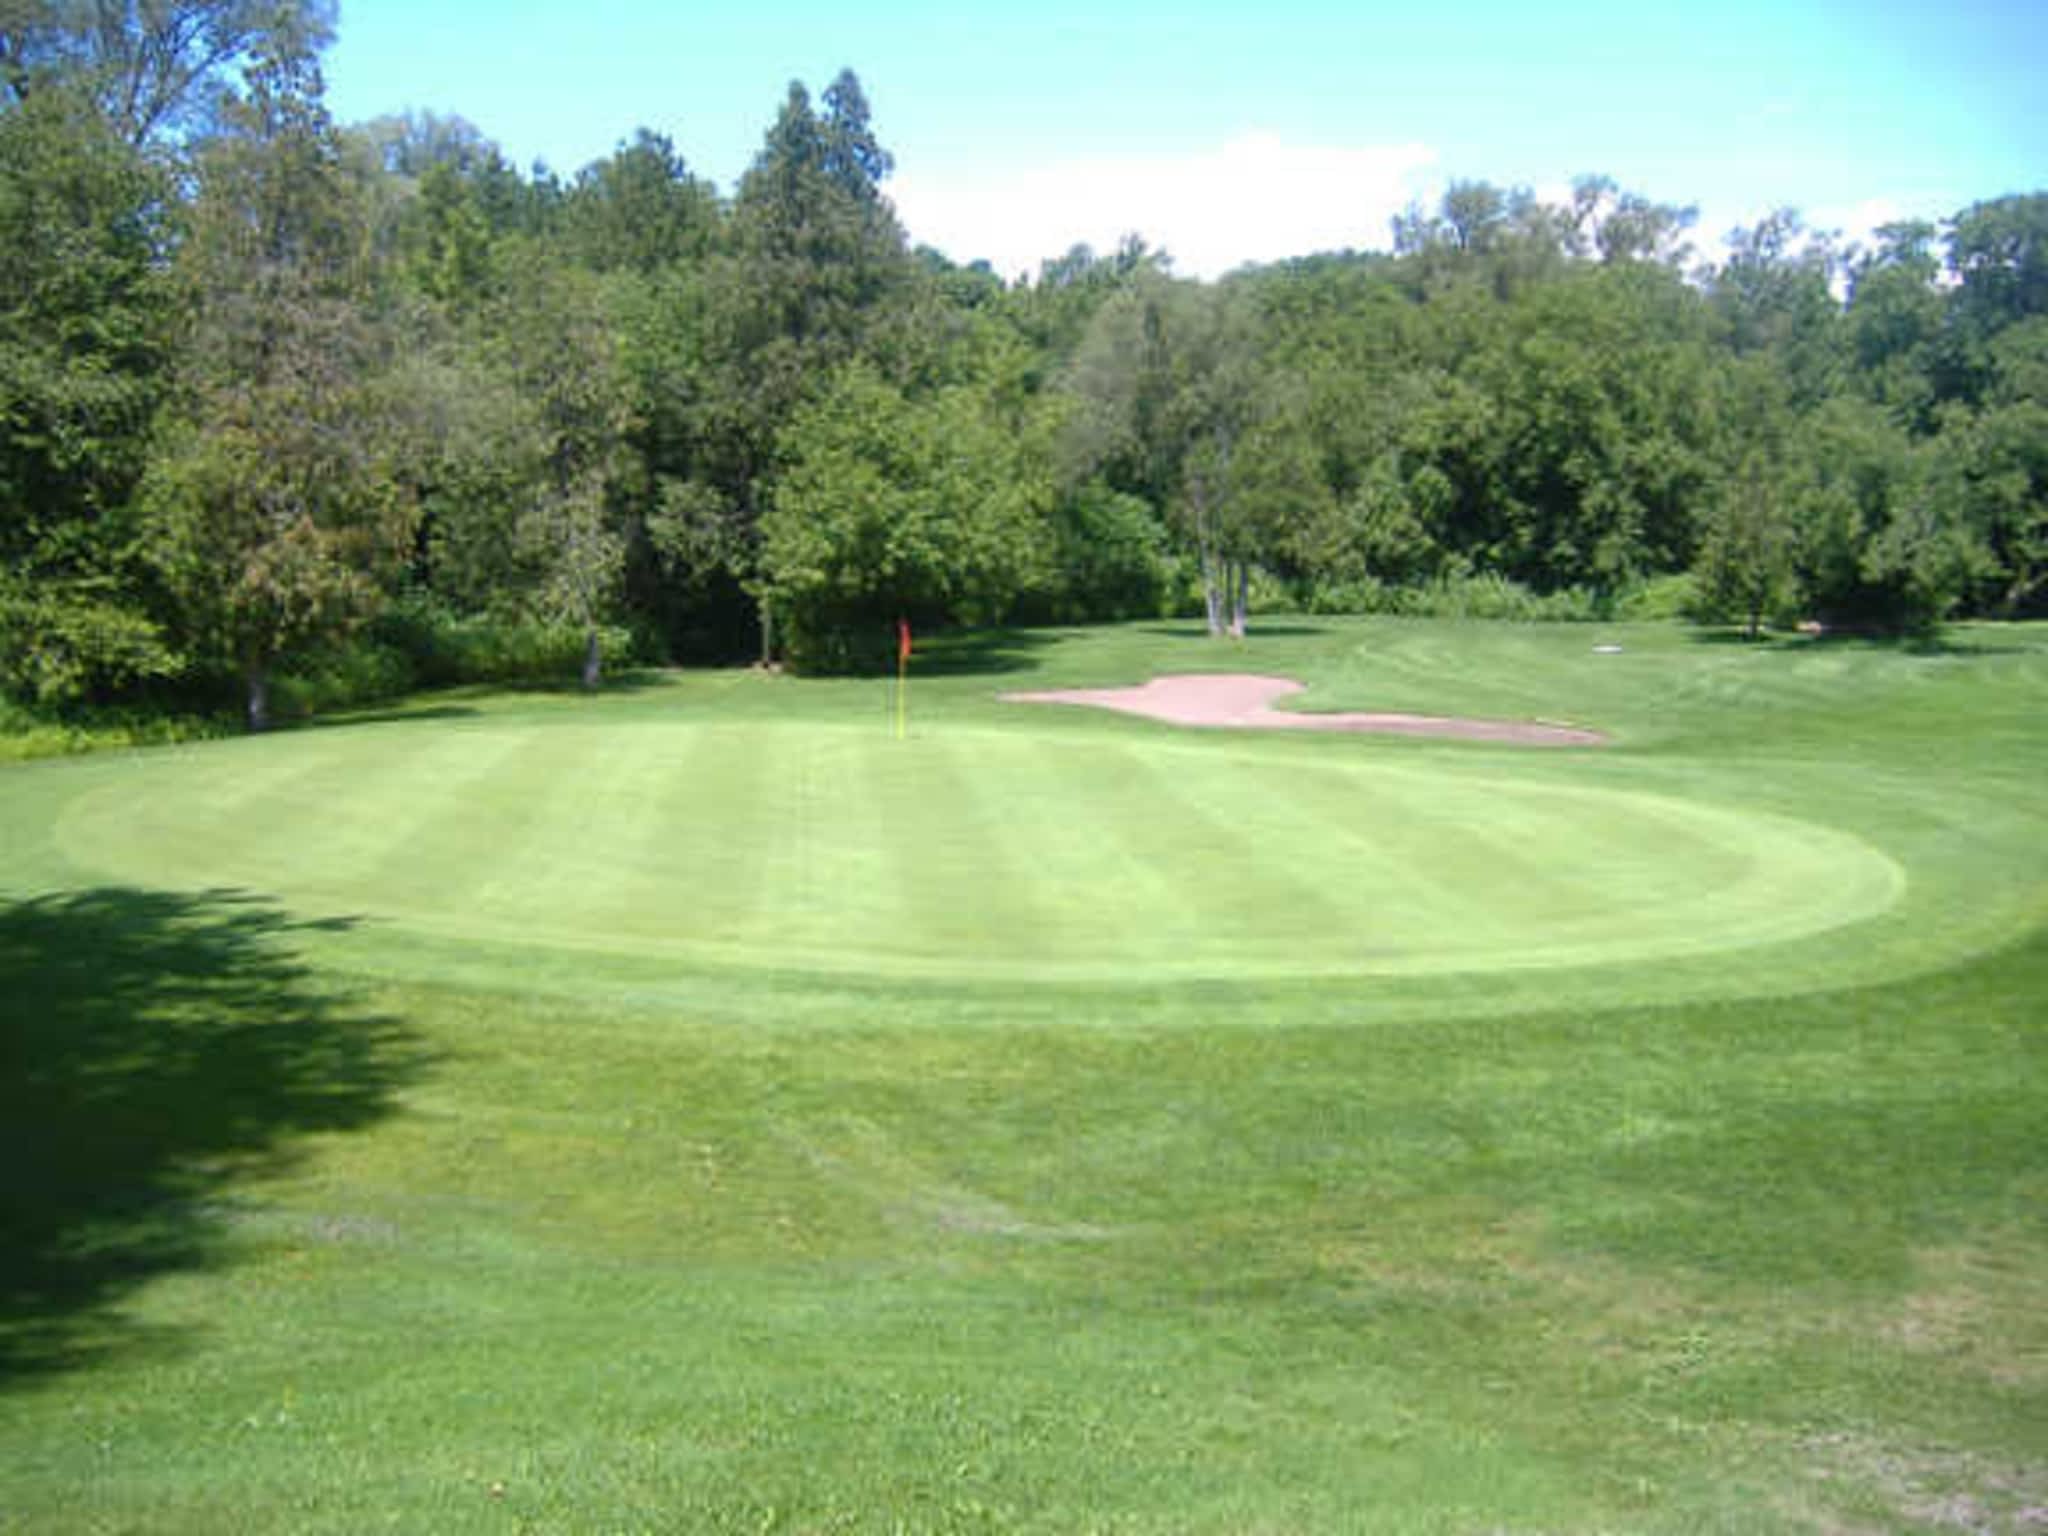 photo Lyndebrook Golf Course